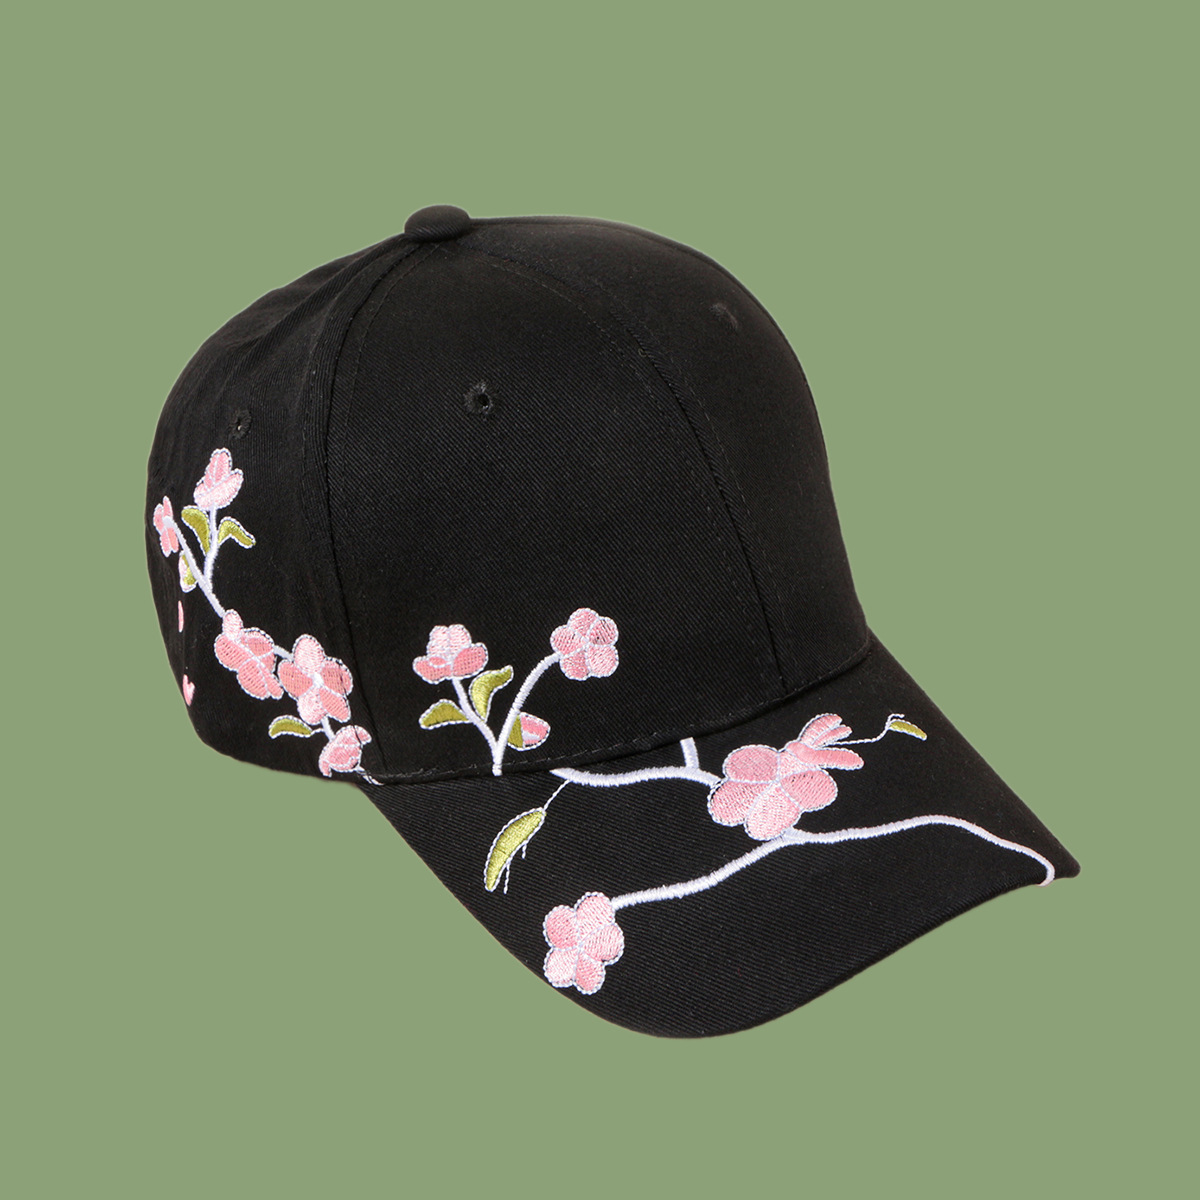 Baseball Pink Sunshade Hat NSTQ41196